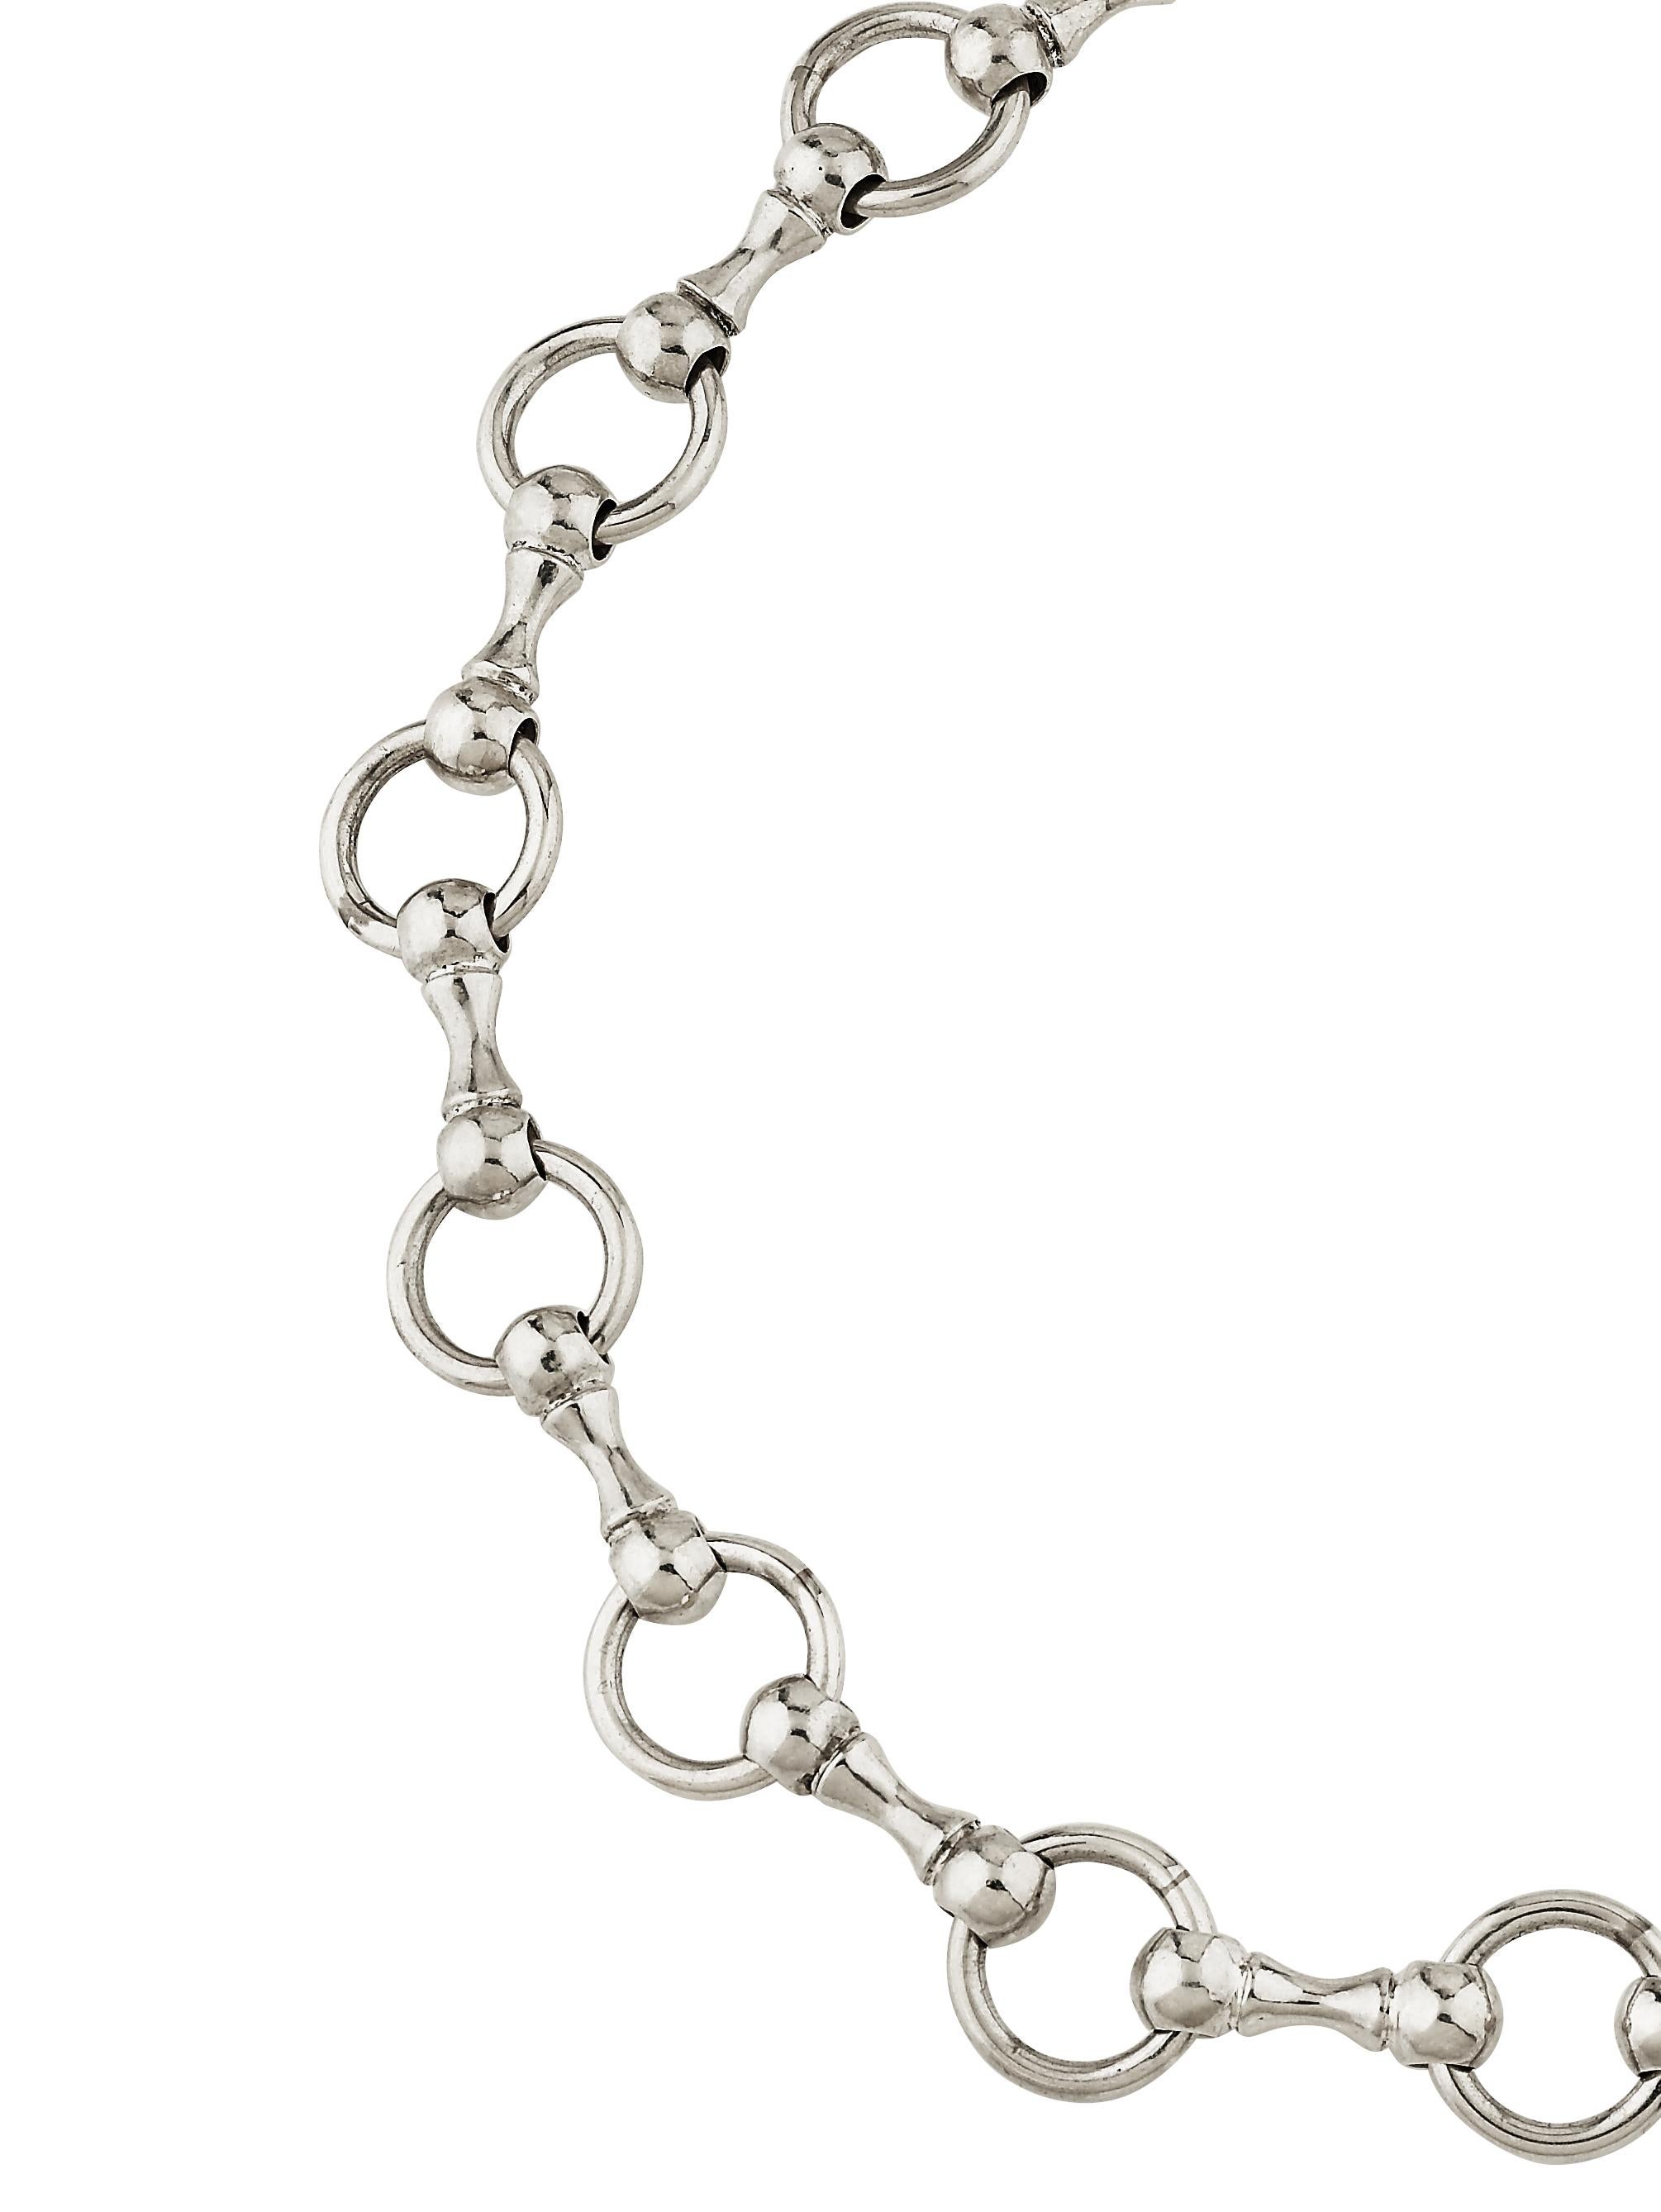 Contemporain Betony Vernon « O'Ring Chain Chain Medium Collier » en argent sterling 925 en stock en vente